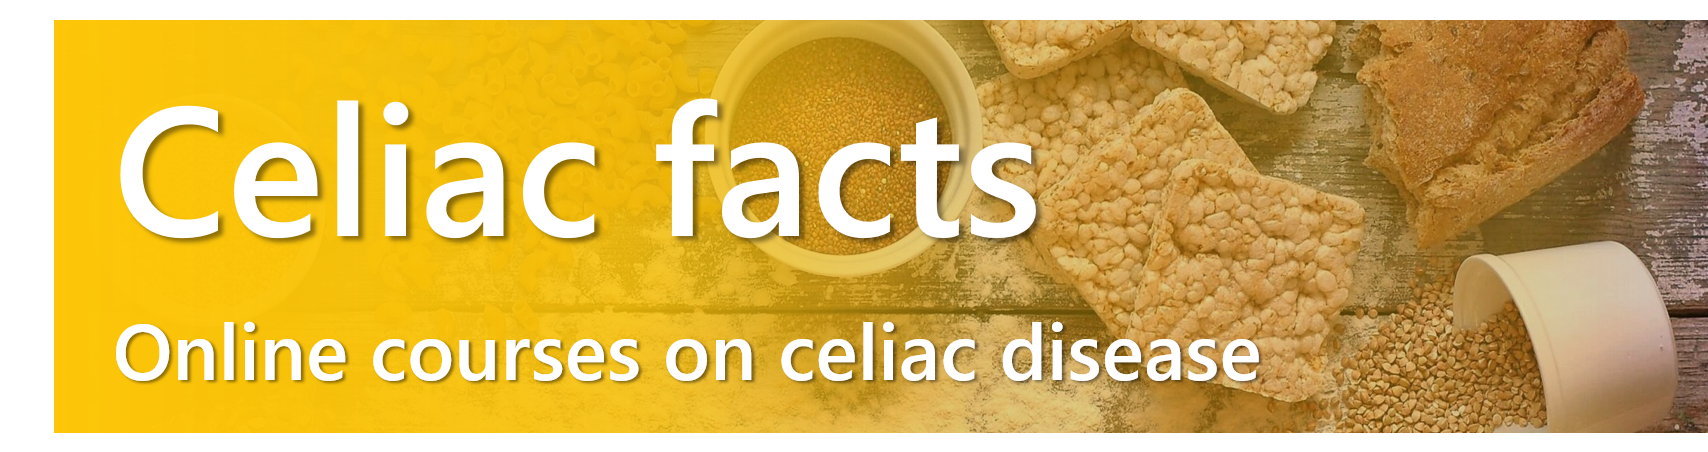 Celiac facts online courses on celiac disease